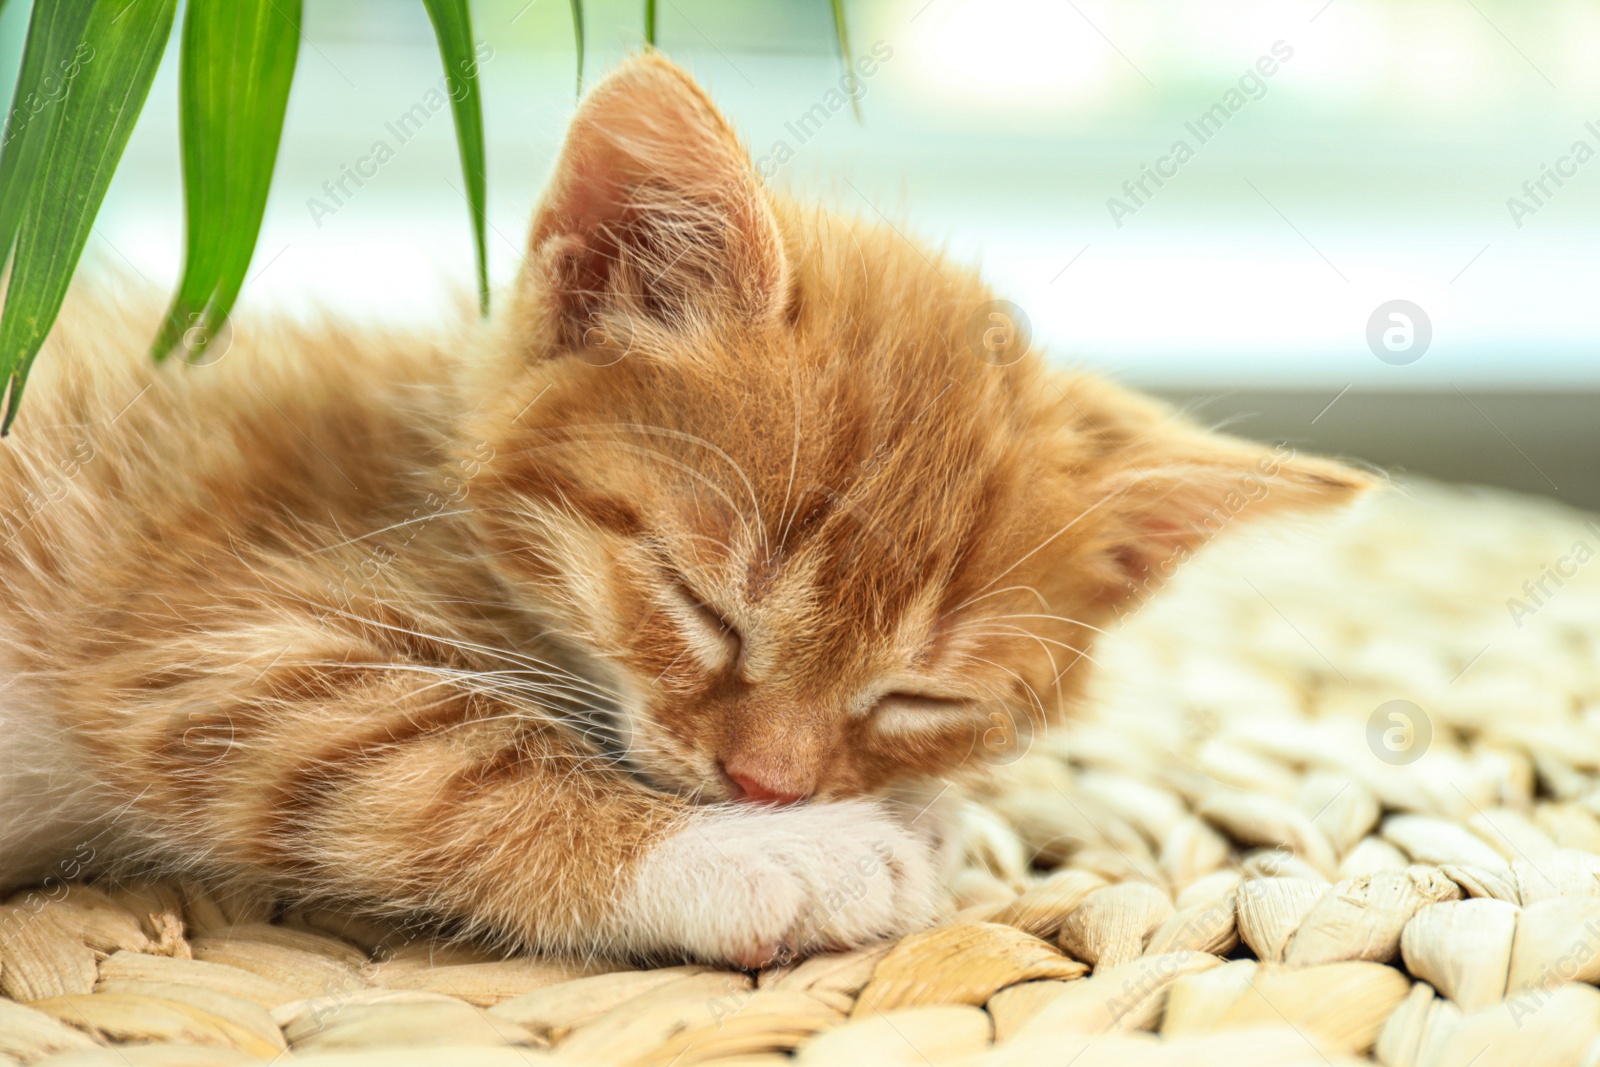 Photo of Cute little red kitten sleeping on wicker mat, closeup